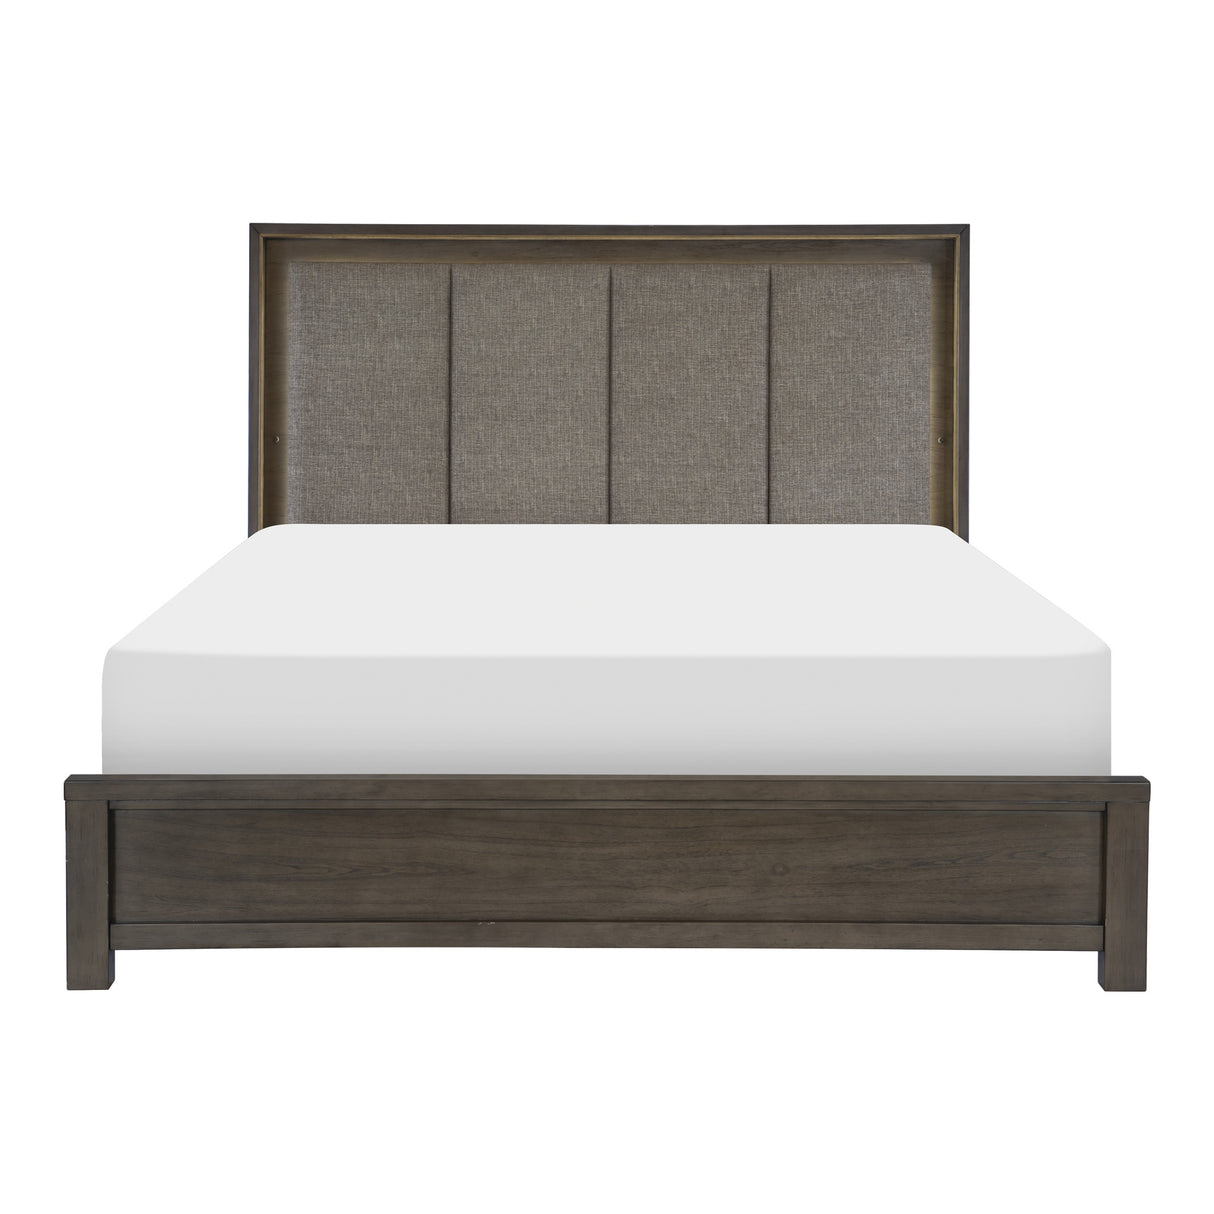 Scarlet Brownish Gray King LED Upholstered Panel Bed